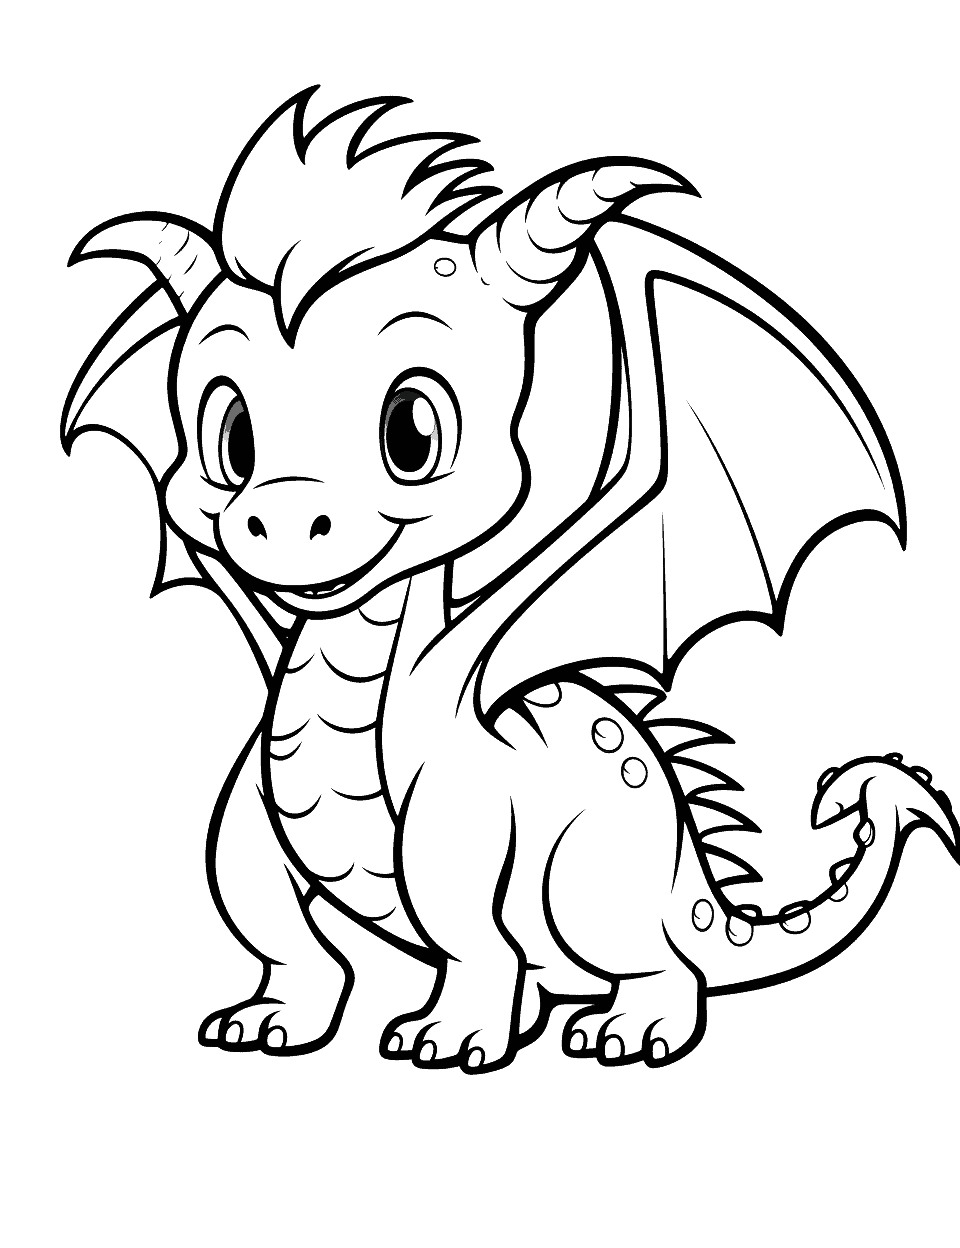 Kawaii Baby Dragon Coloring Page - A kawaii-style baby dragon with big eyes and a playful smile.